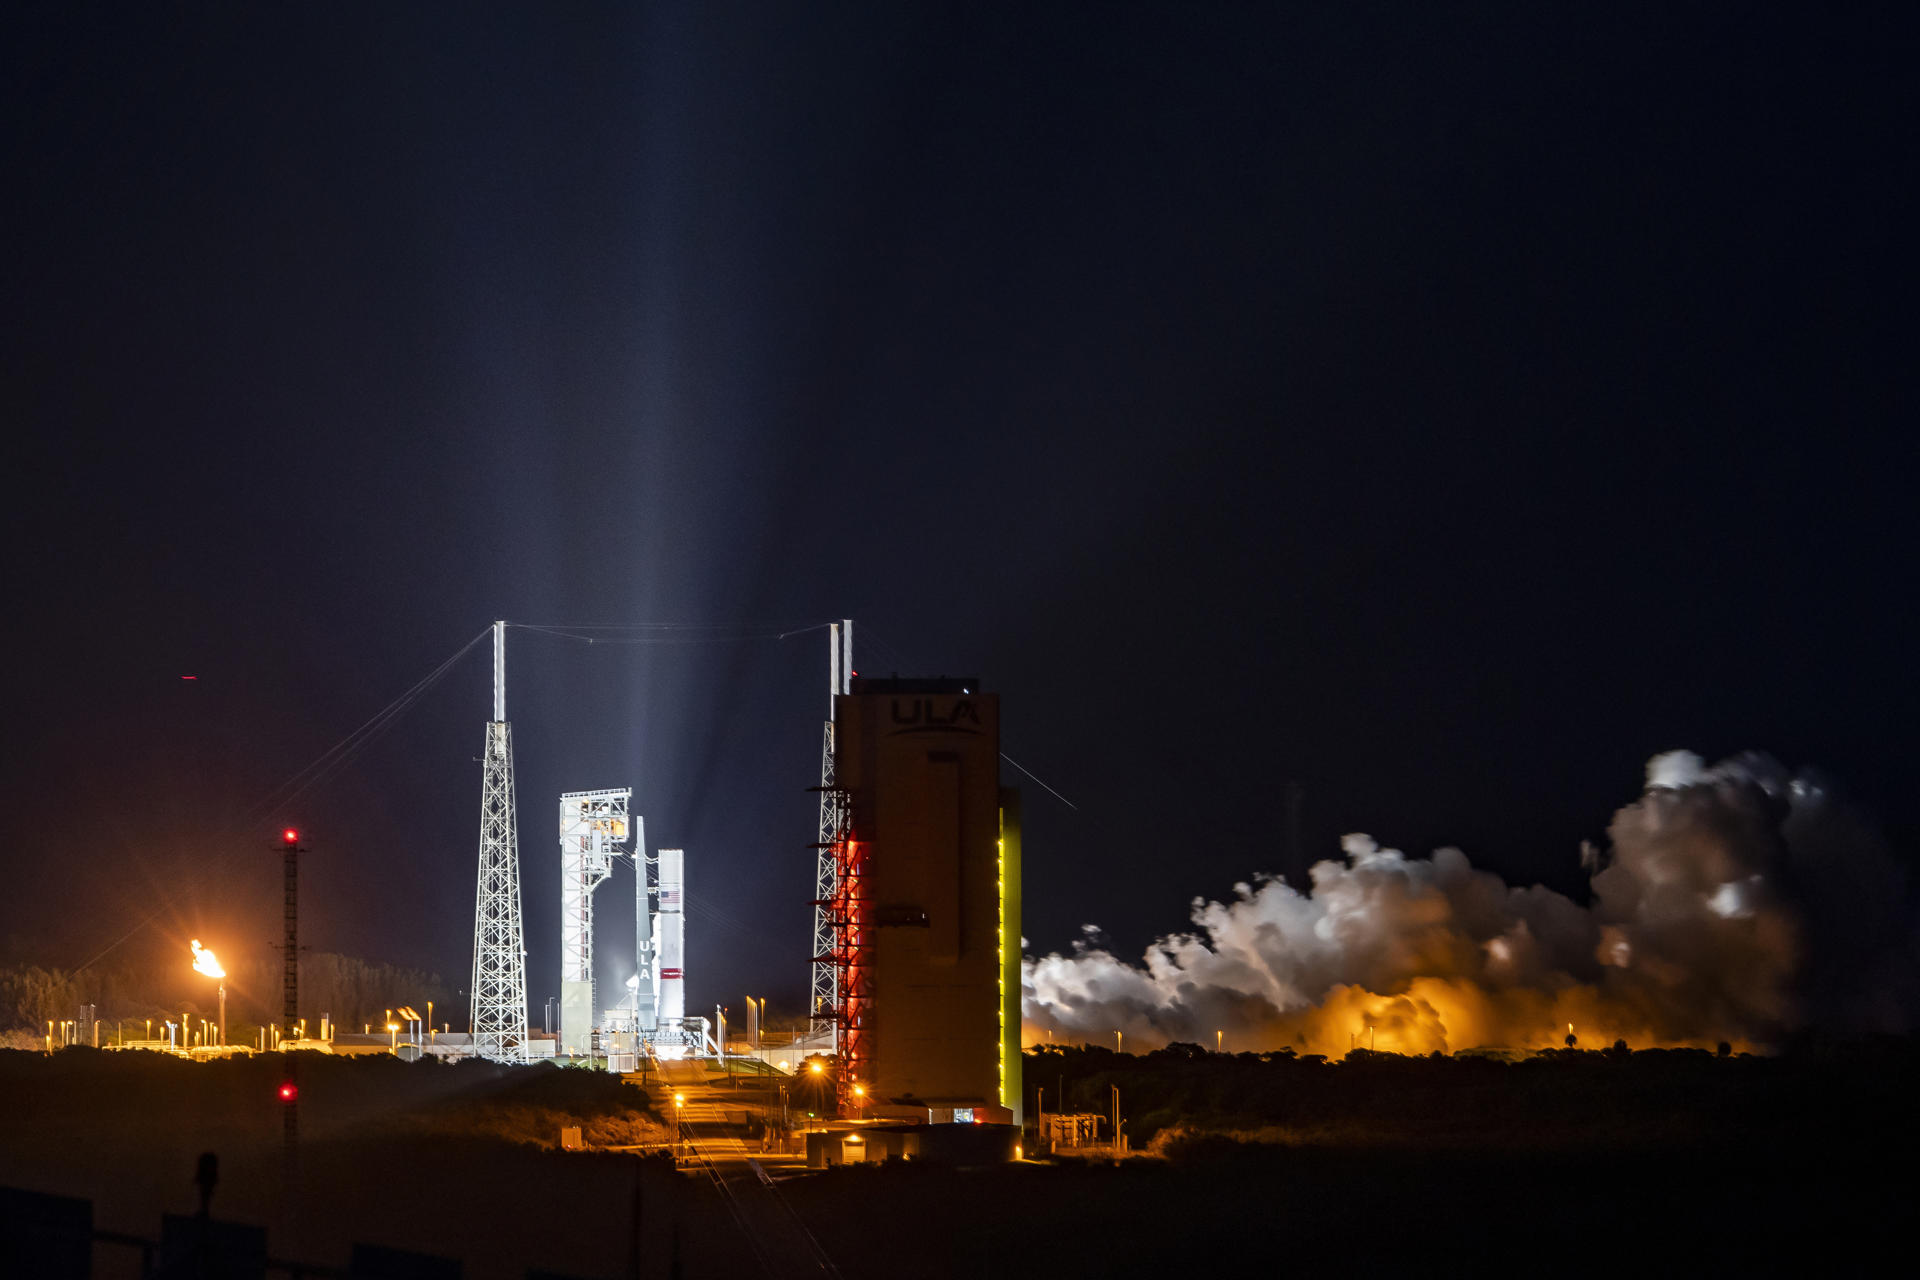 ULA Vulcan rocket, successful test ahead of its launch